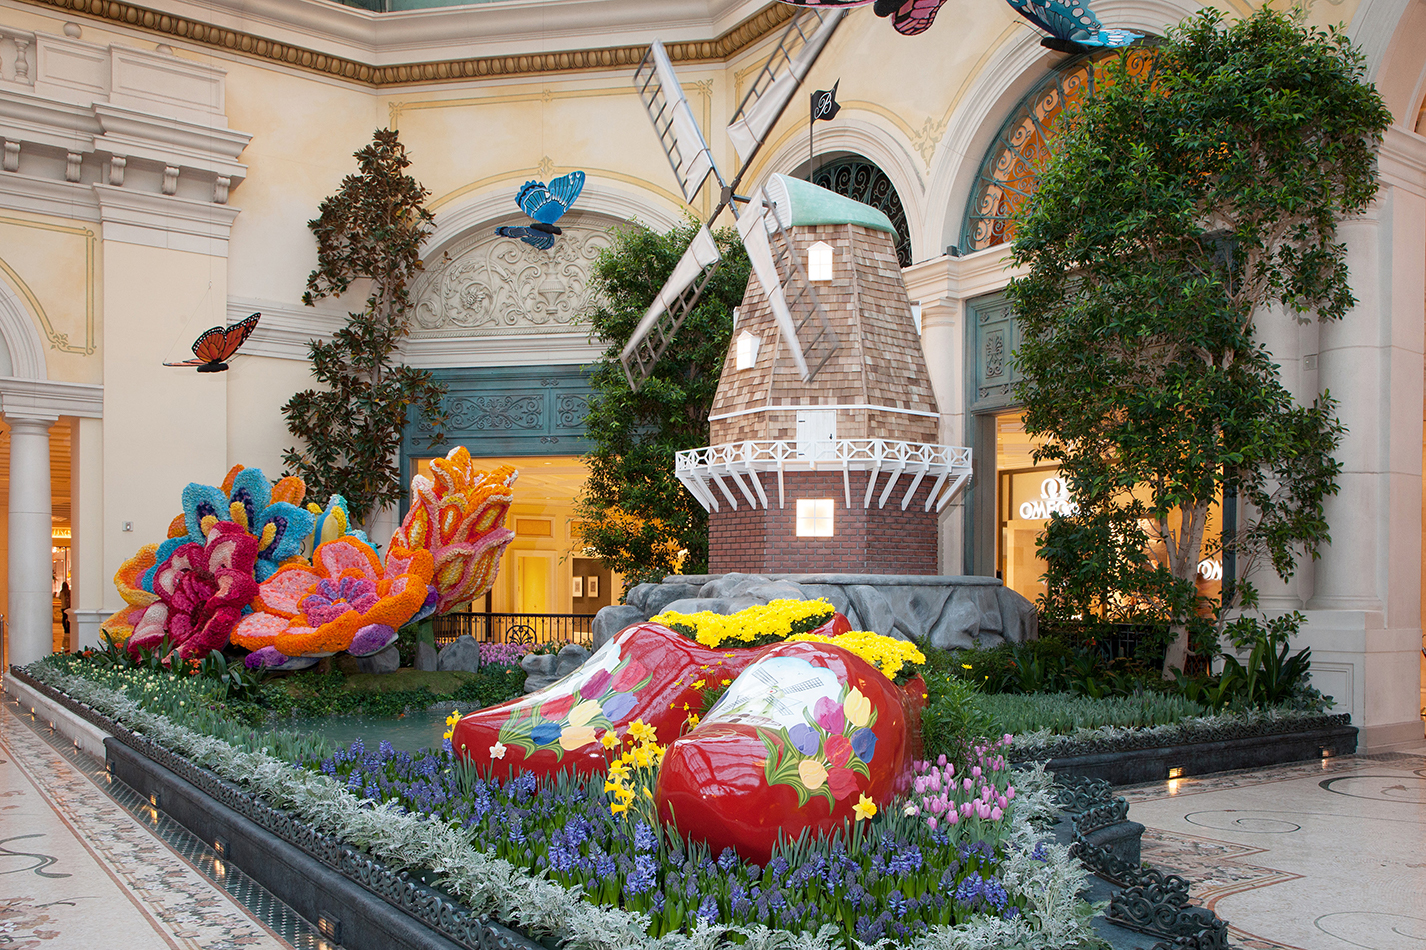 ‘Springtime Celebrations around the world’ display at Bellagio’s Conservatory & Botanical Garden